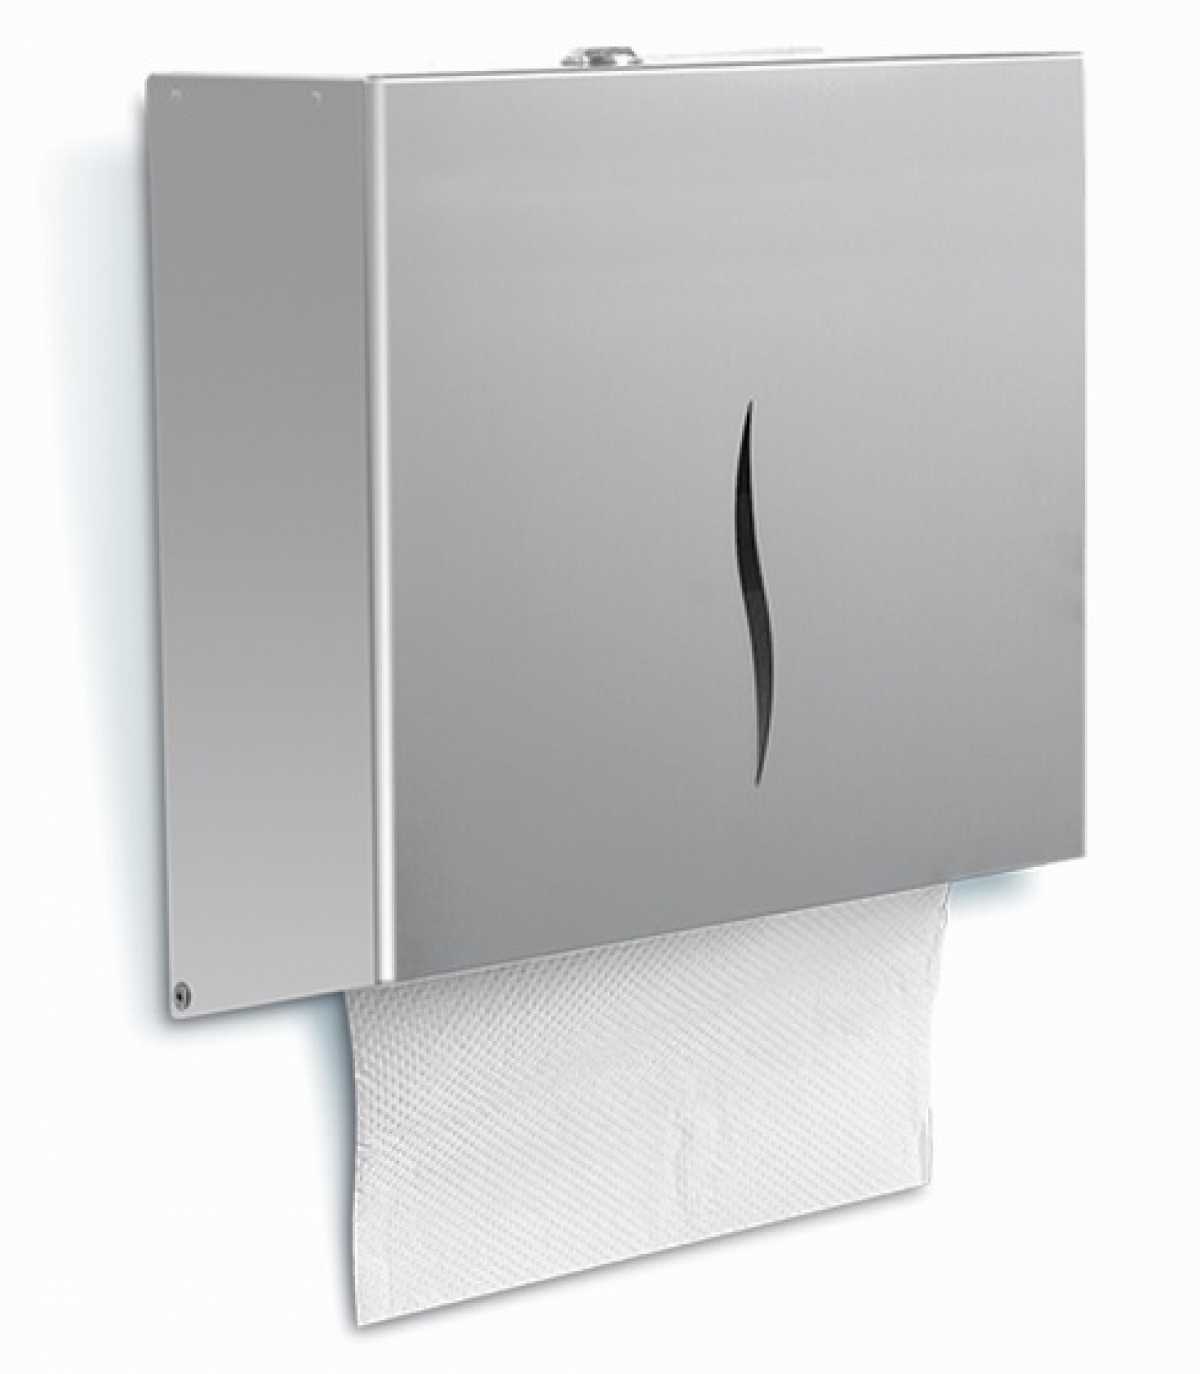 Z-Fold Towel Paper Dispenser